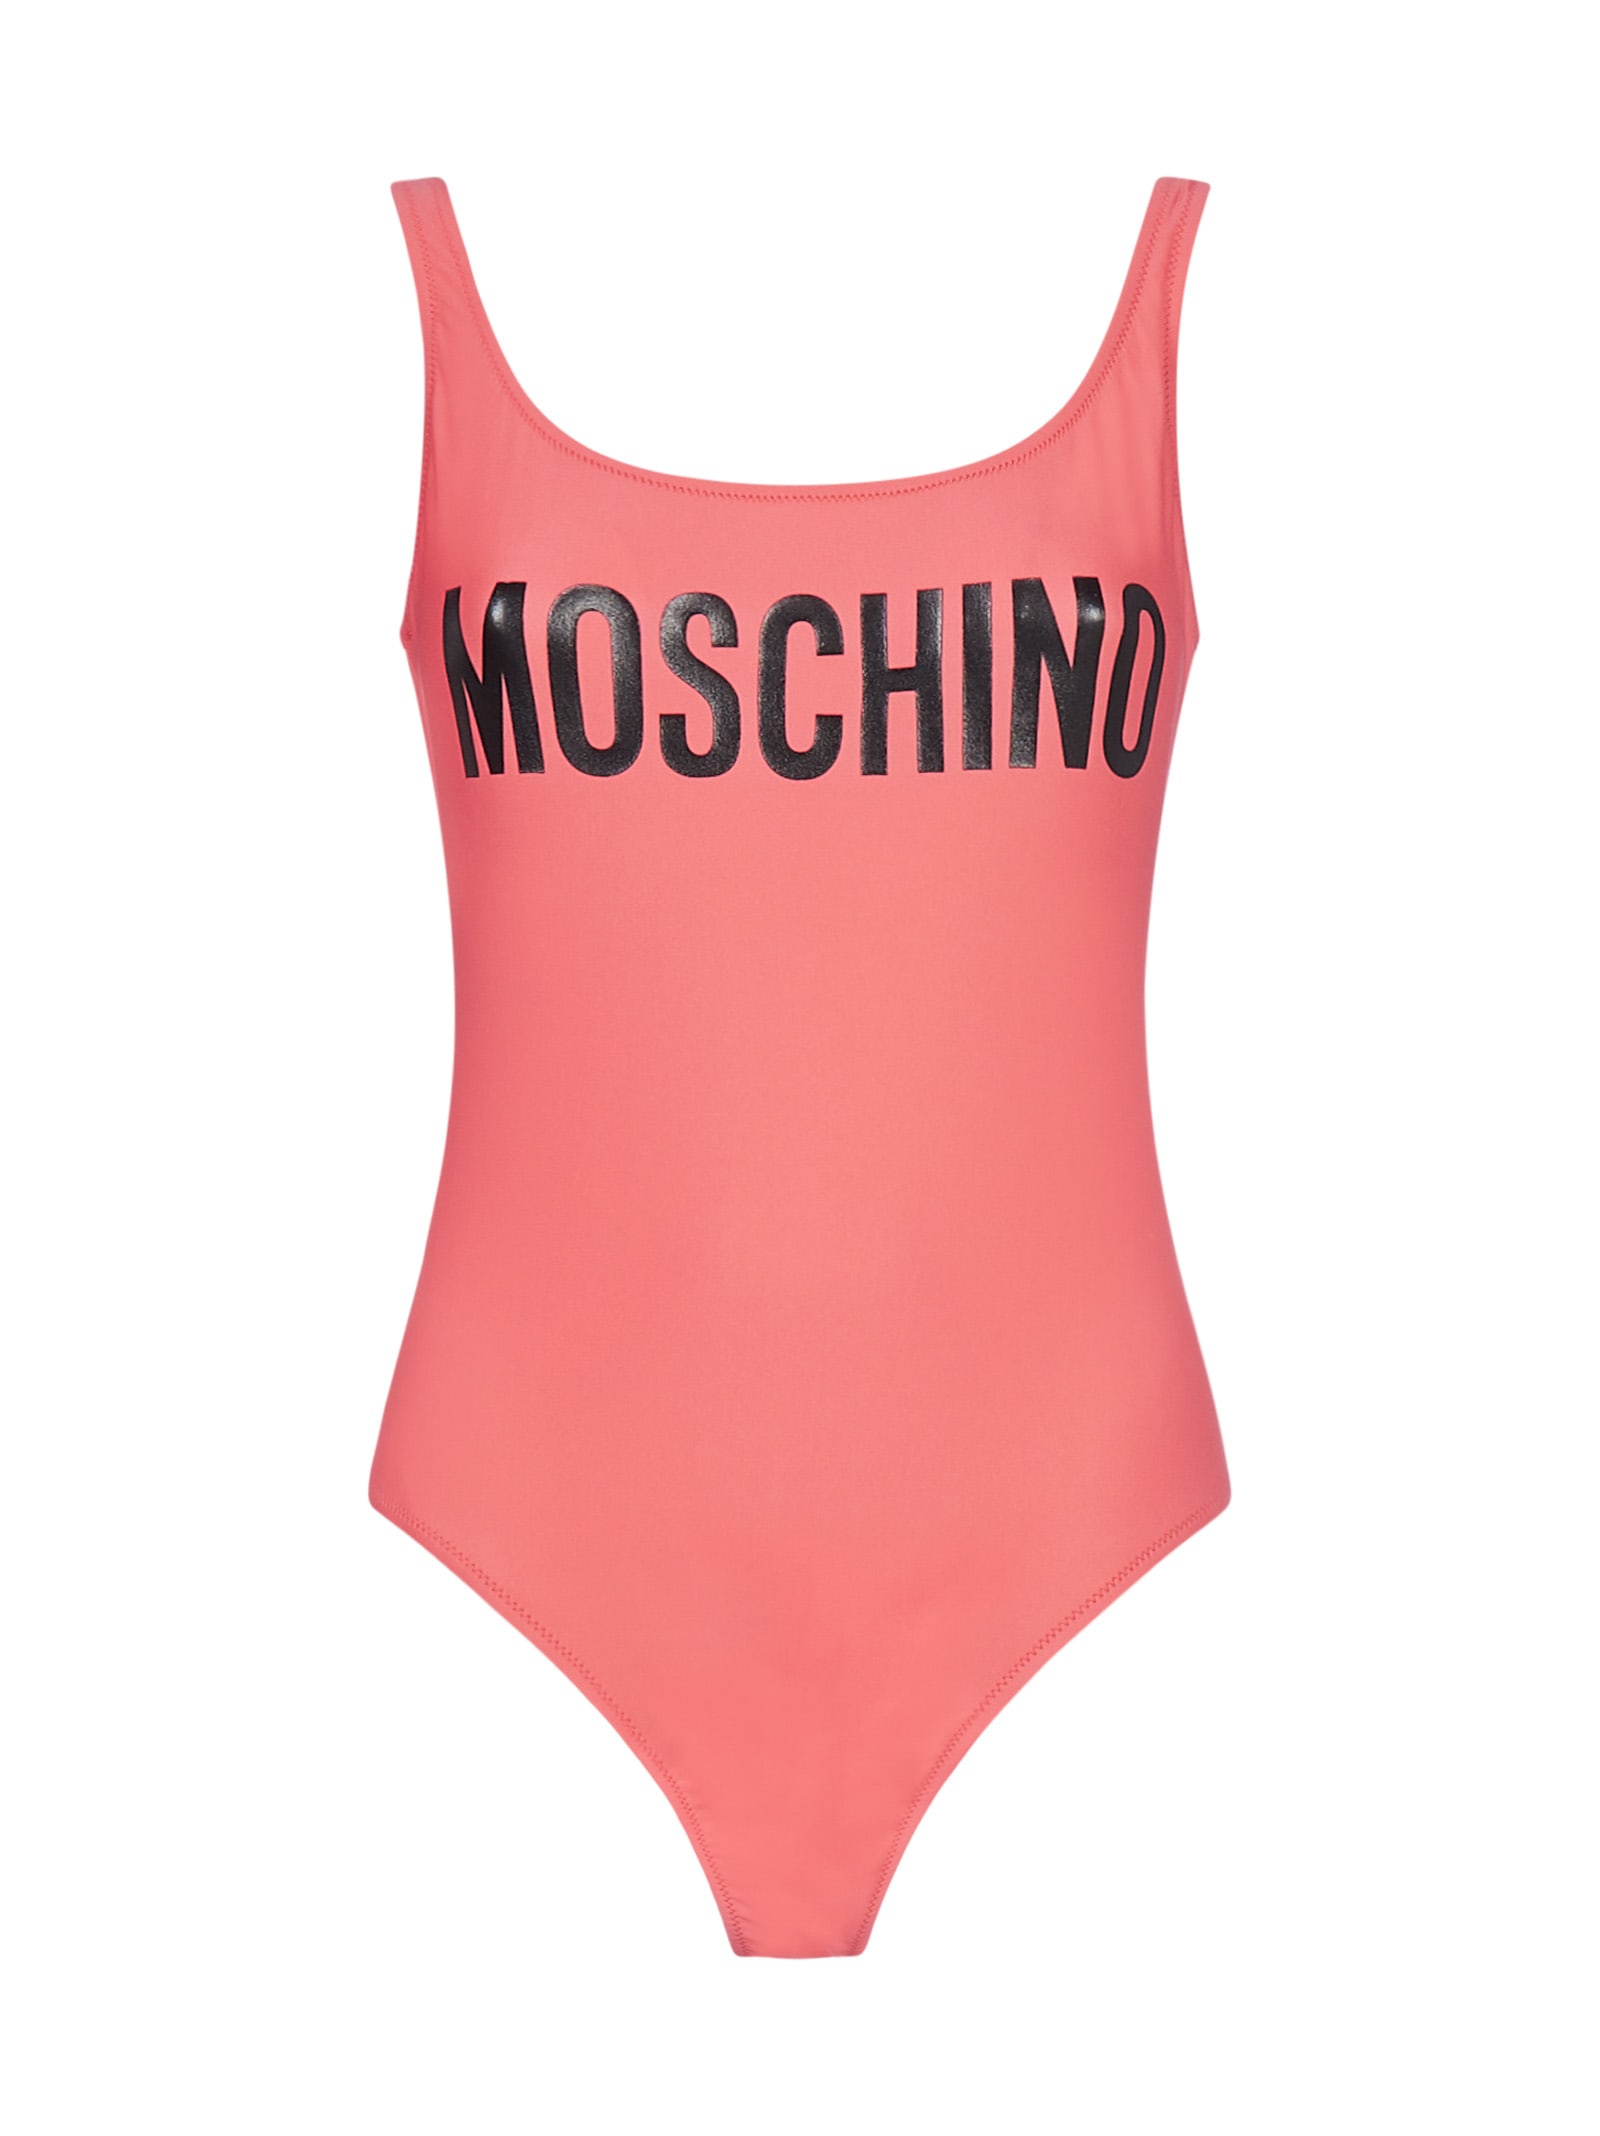 Moschino Swimwear In Fuchsia